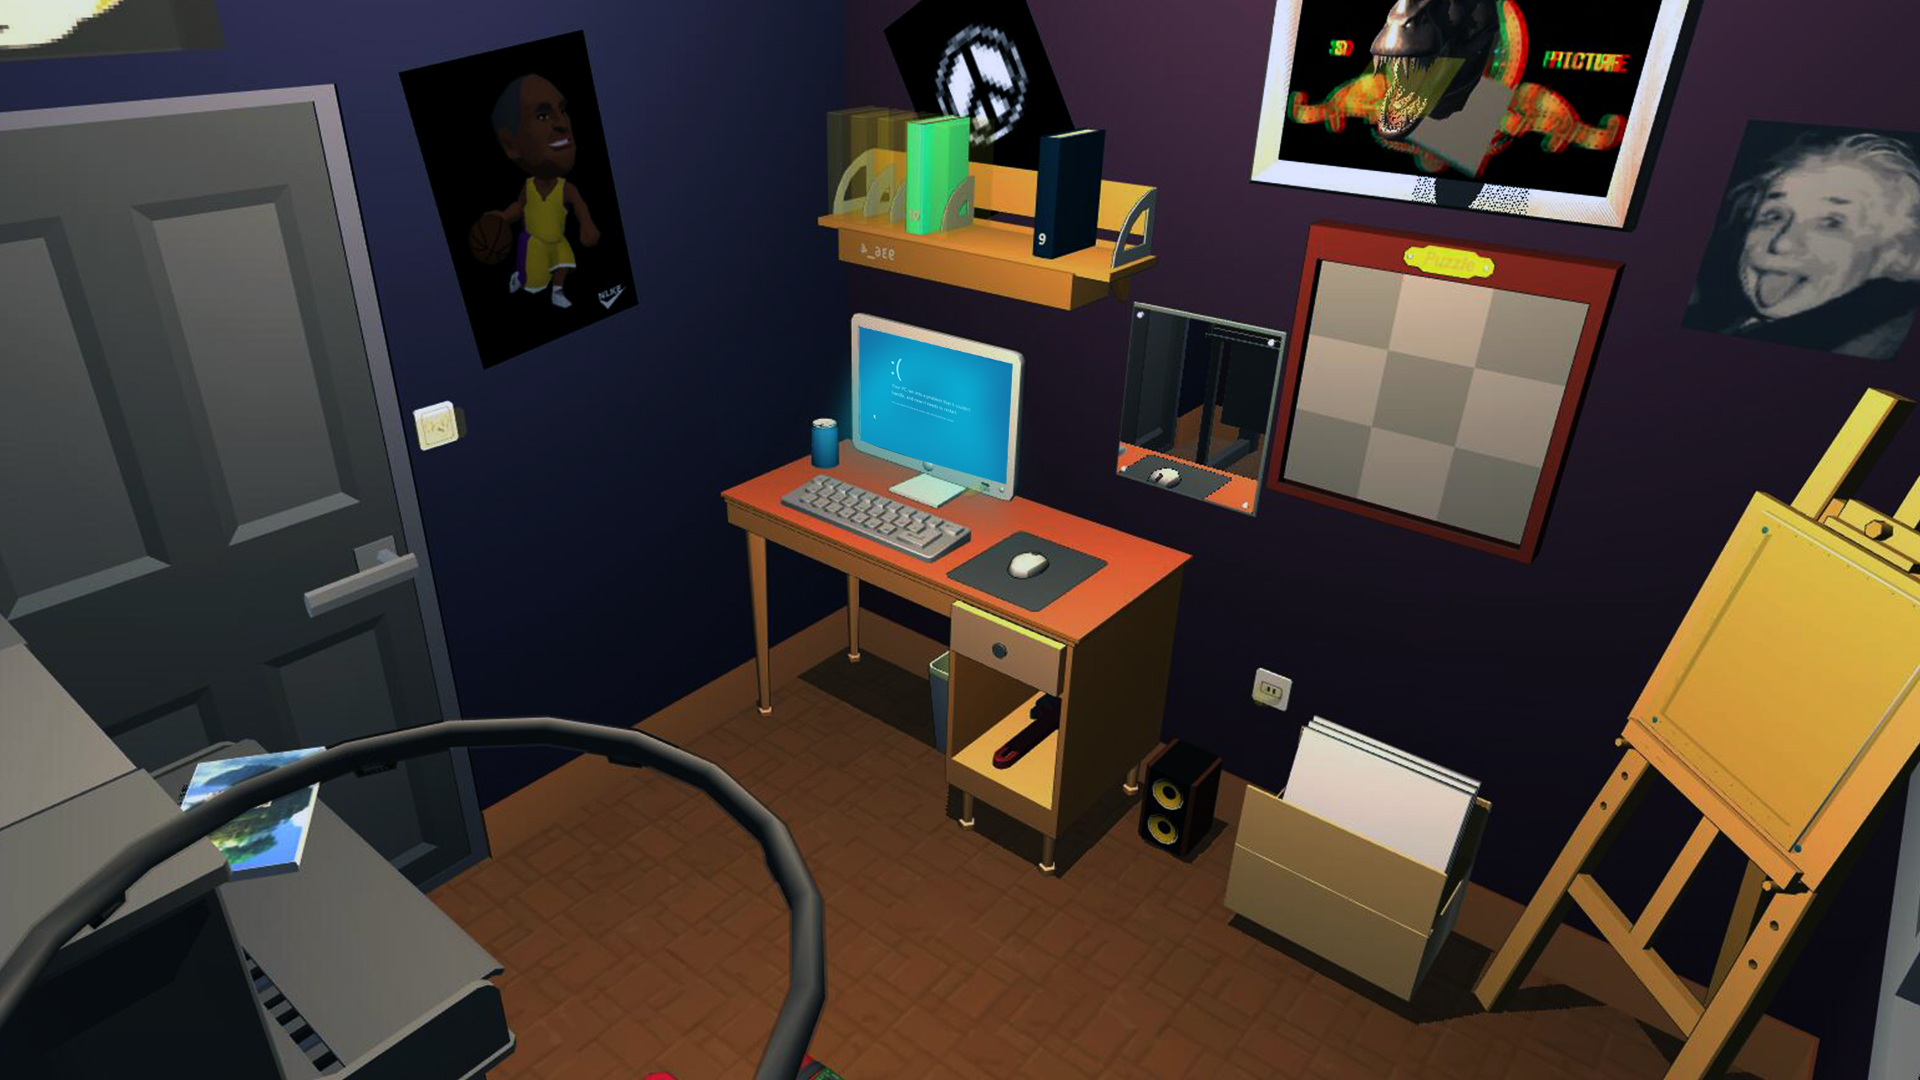 Игры выбраться из комнаты. VR головоломка Escape Room. The Puzzle Room VR ( Escape the Room ). Компьютерная комната. Комната для игр.